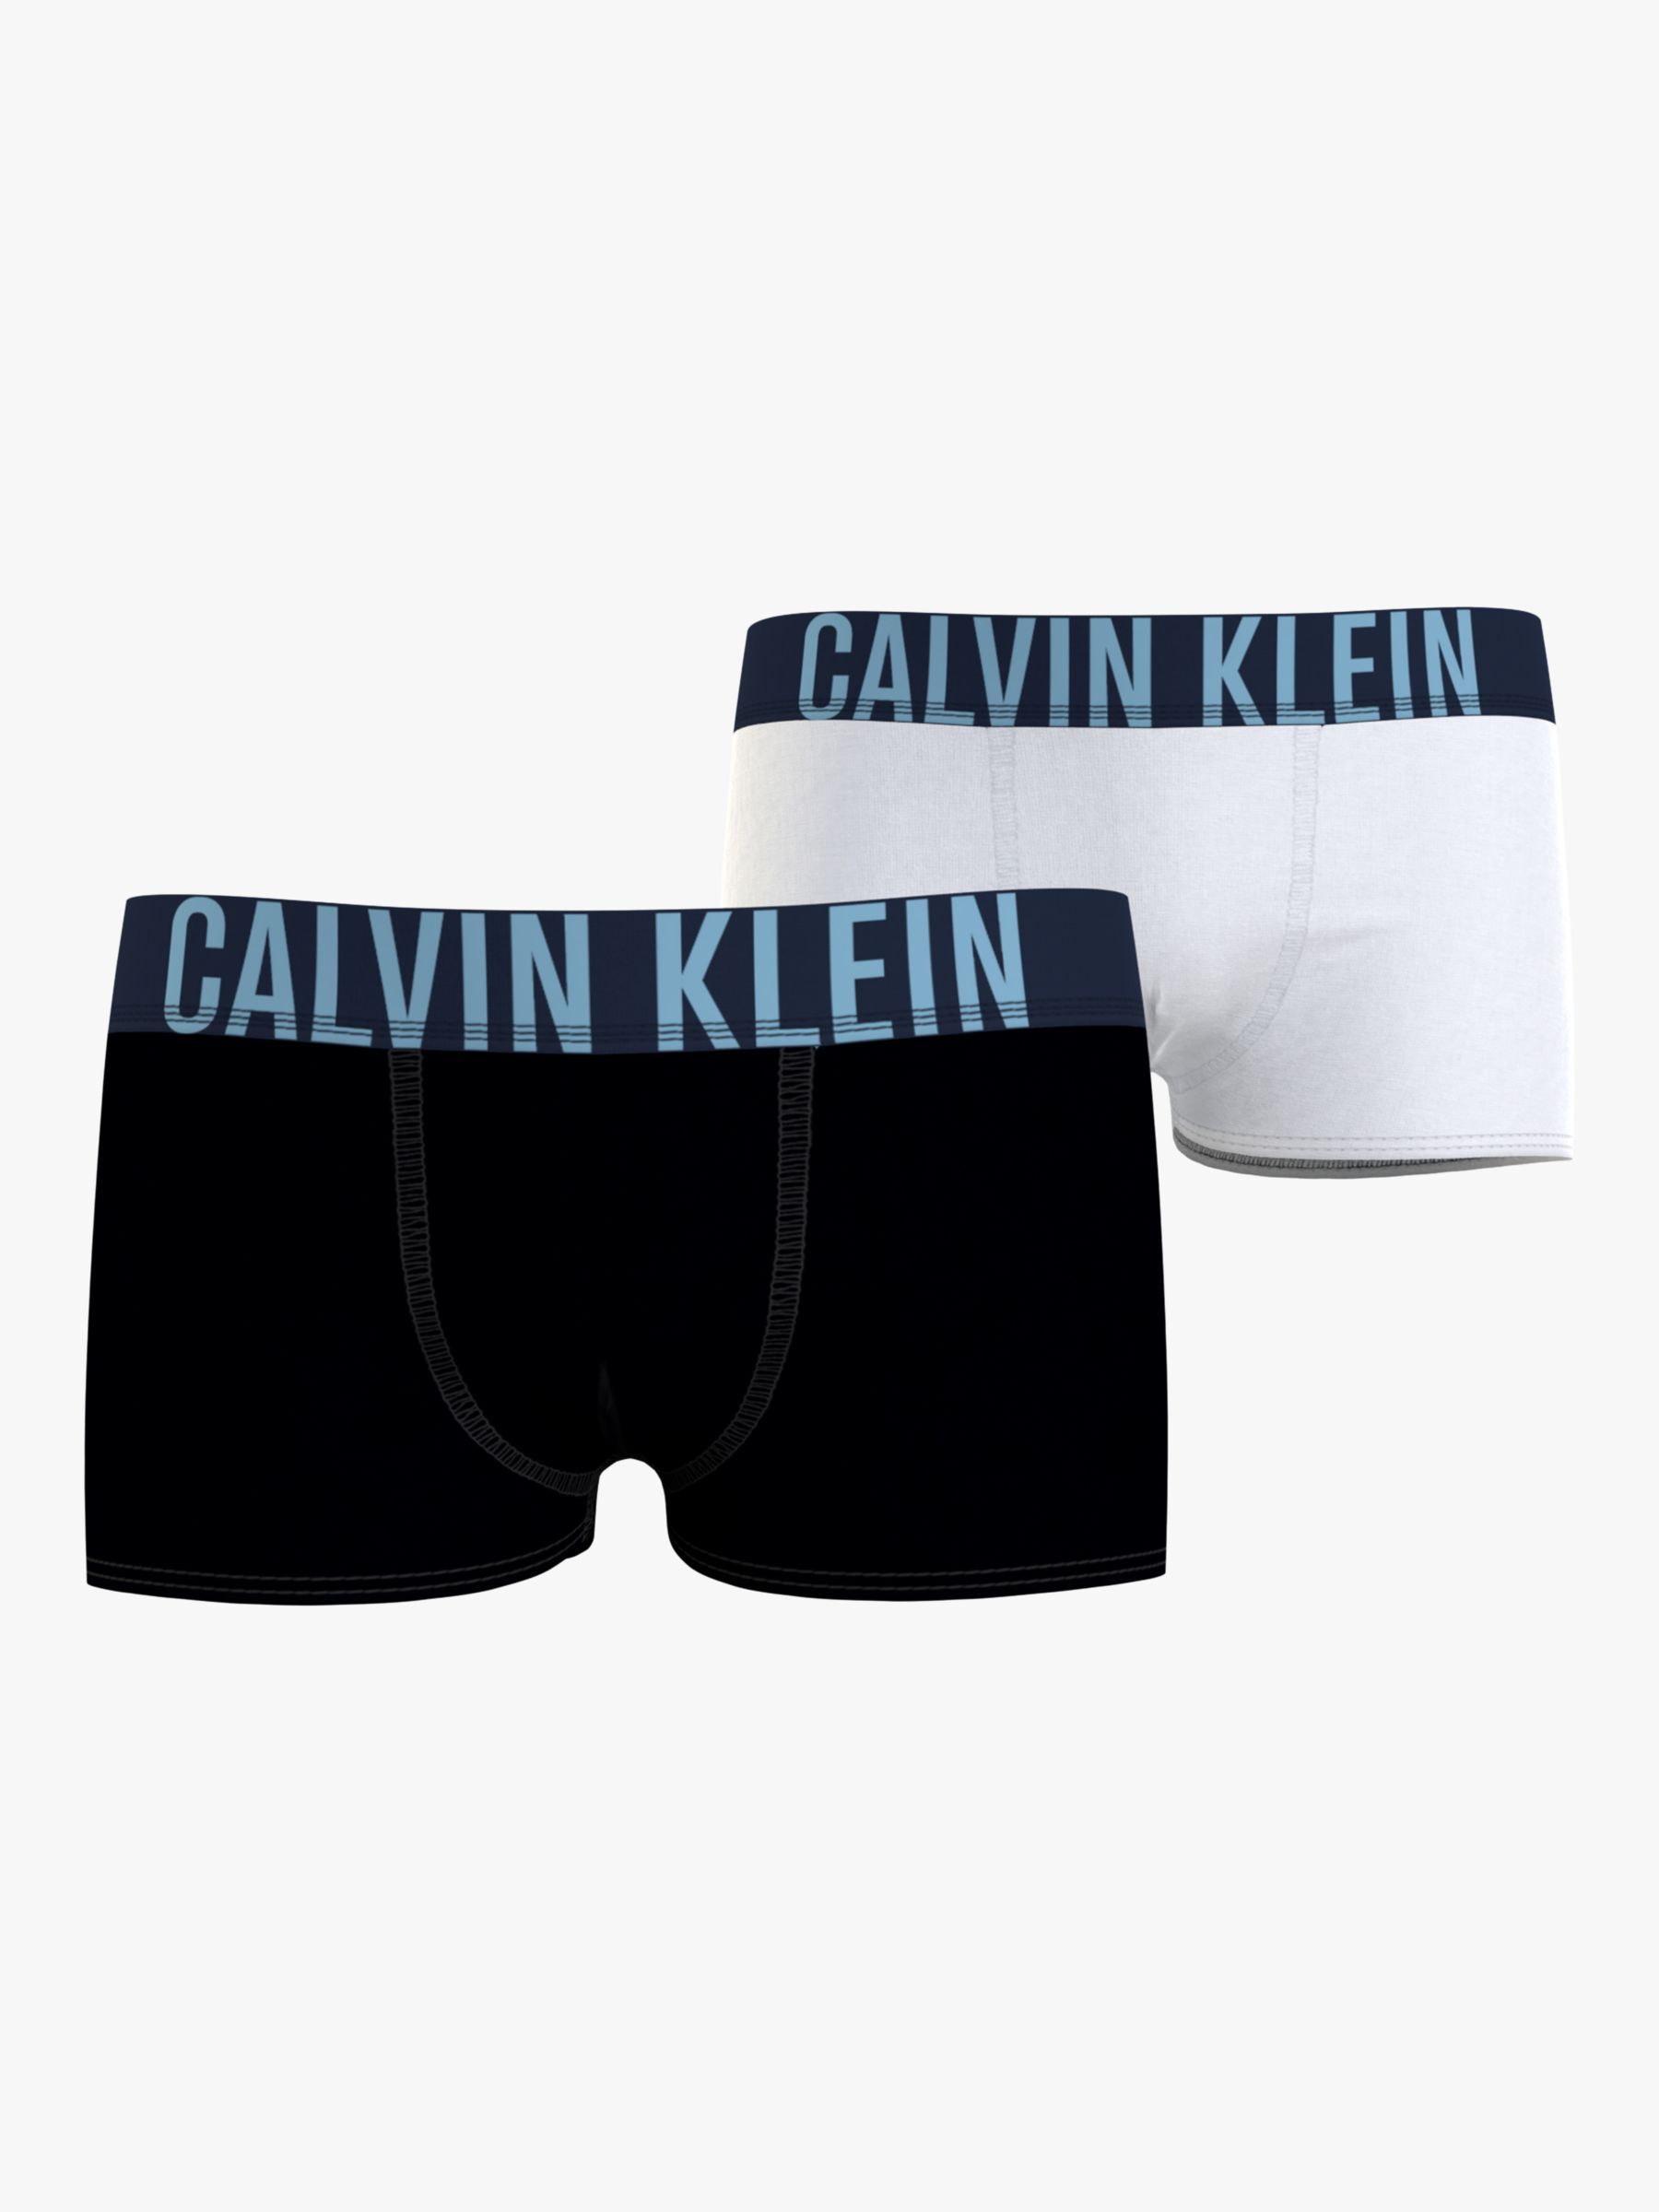 Calvin Klein Children's Intense Power Cotton Trunks, Pack of 2